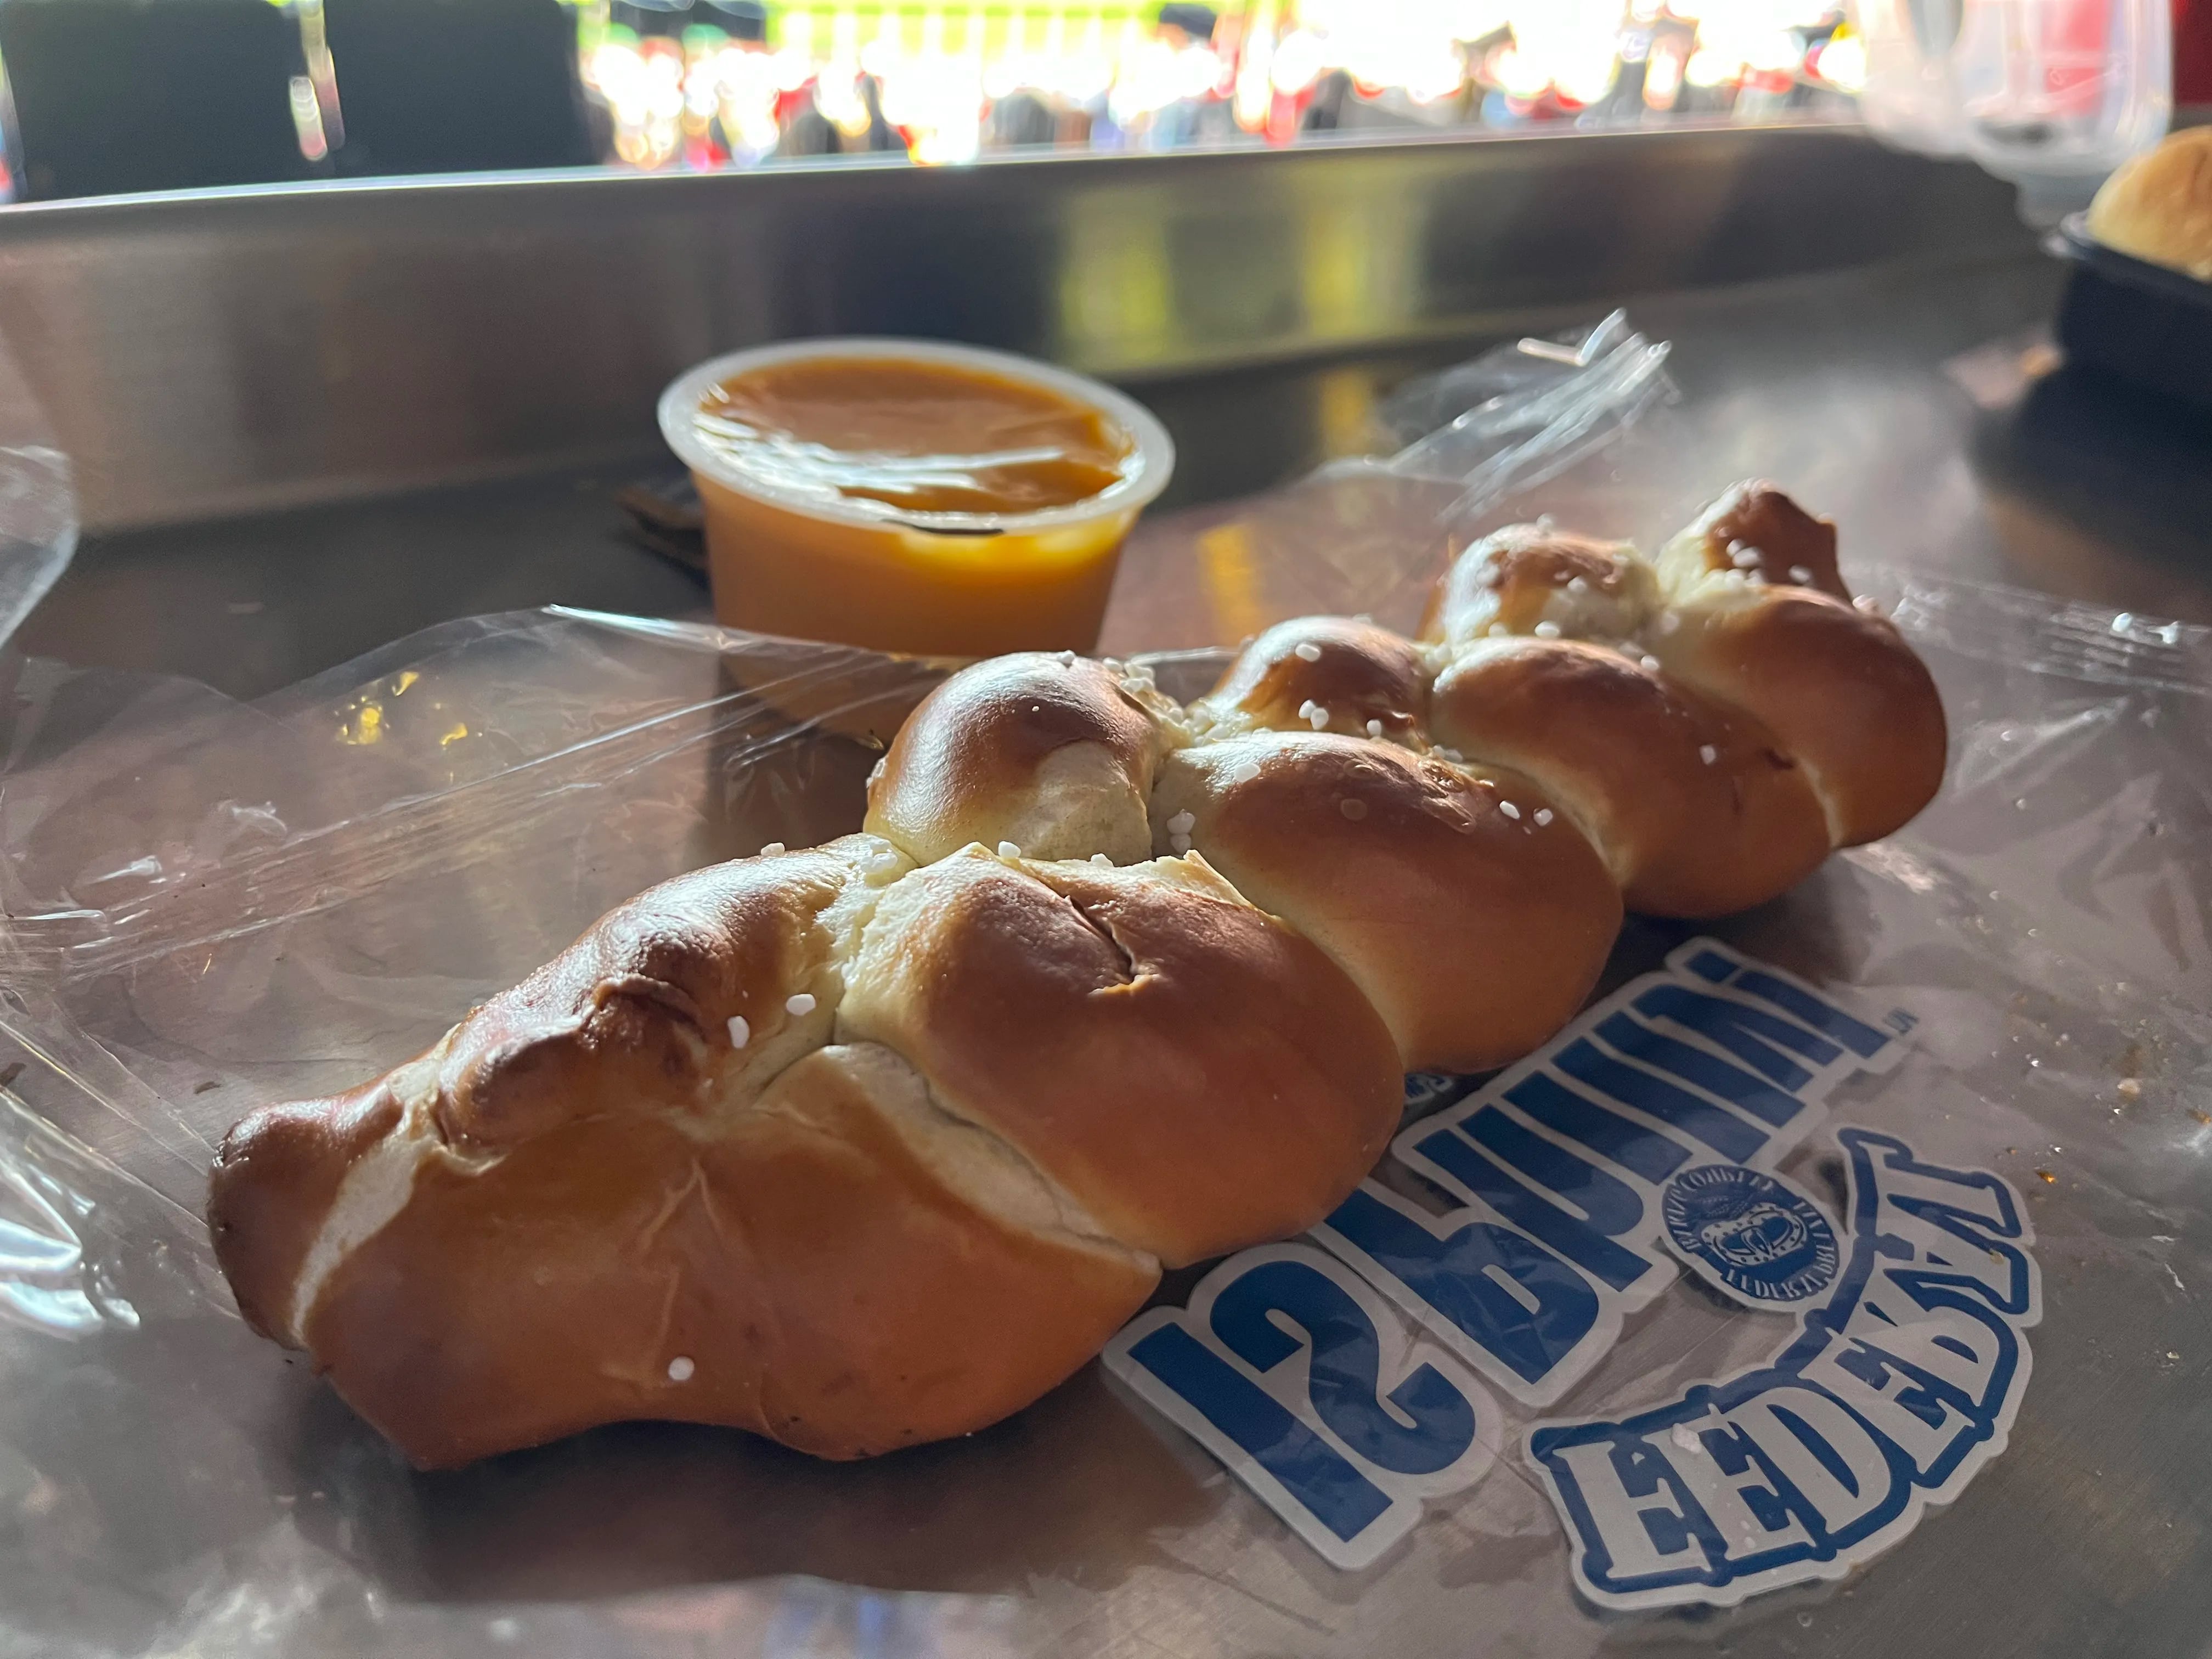 A Federal Pretzel's pretzel braid available at all Ballpark Favorites concession stands at Citizens Bank Park.